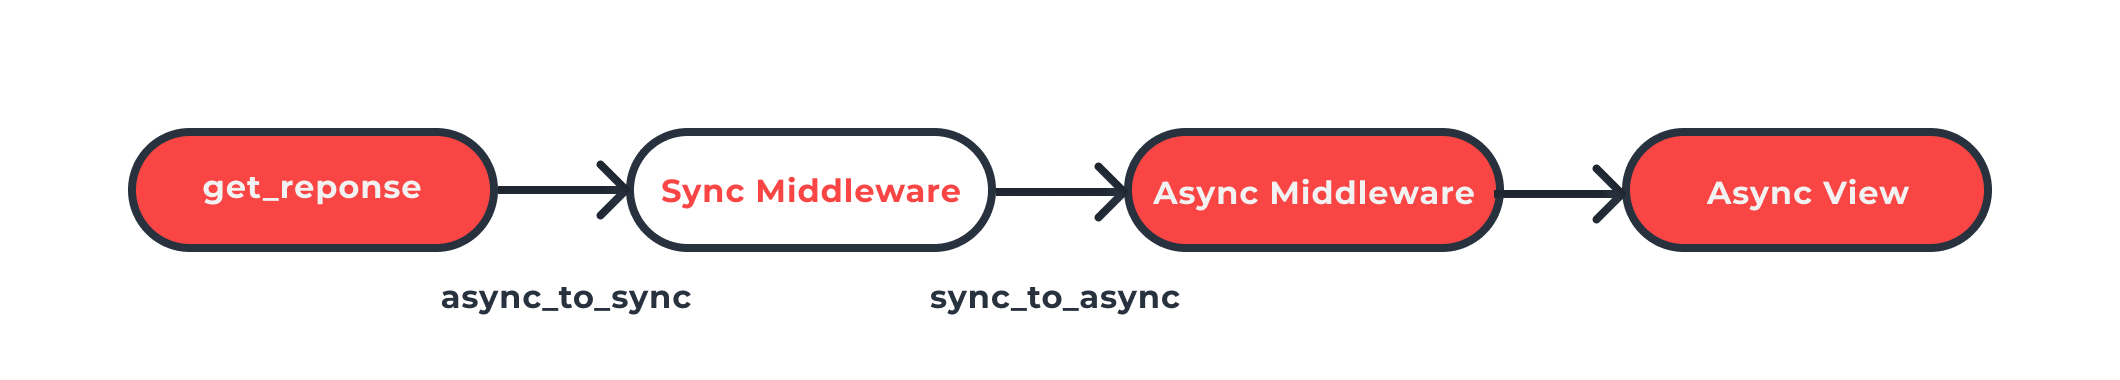 async-middleware